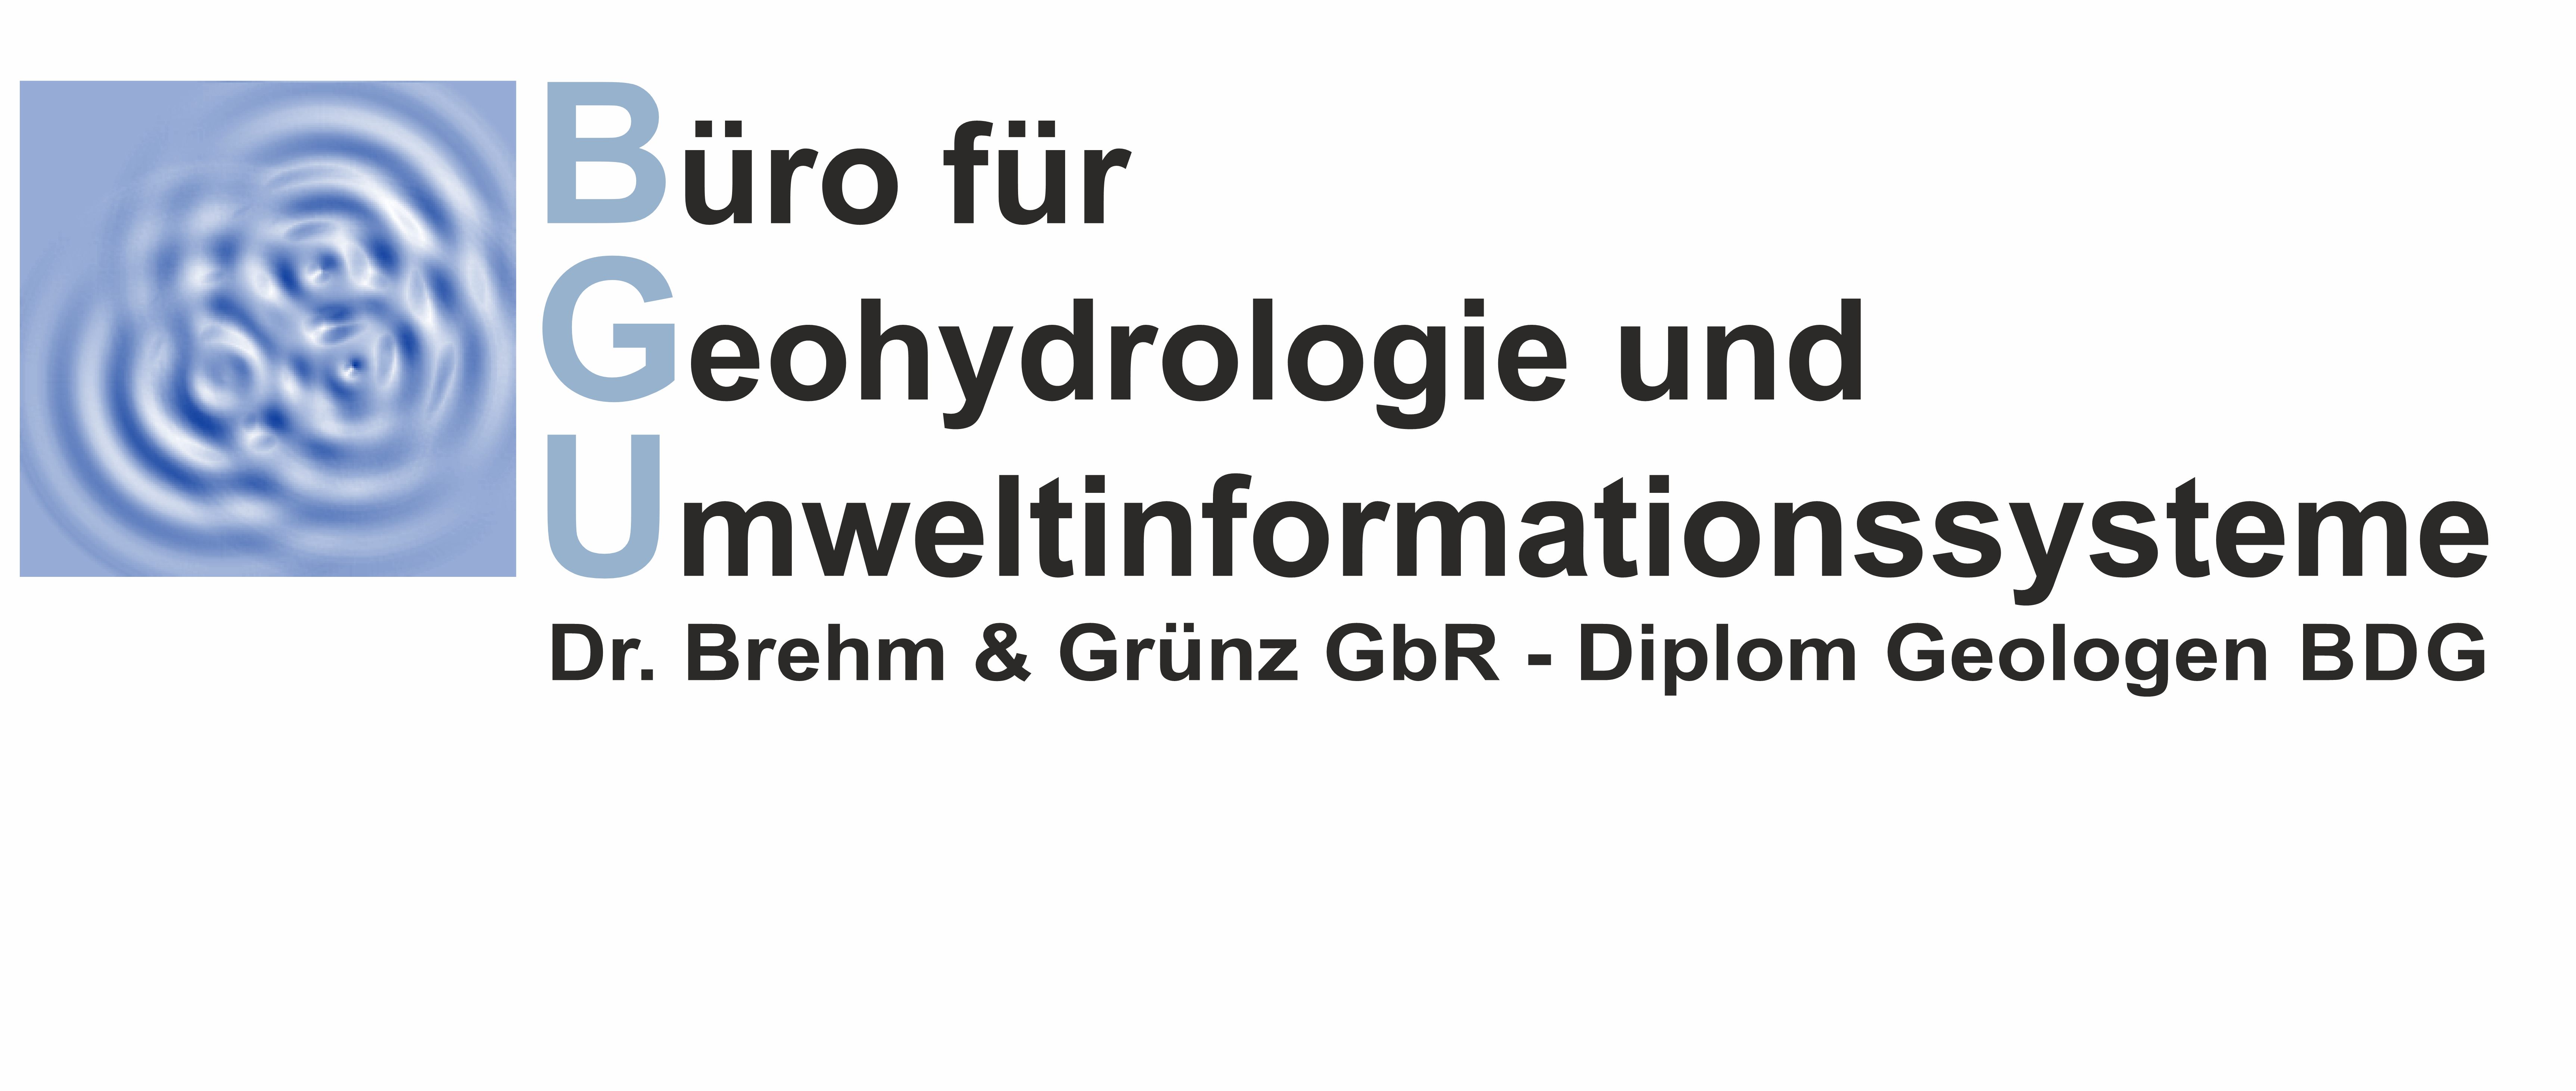 BGU Dr. Brehm & Grünz GbR